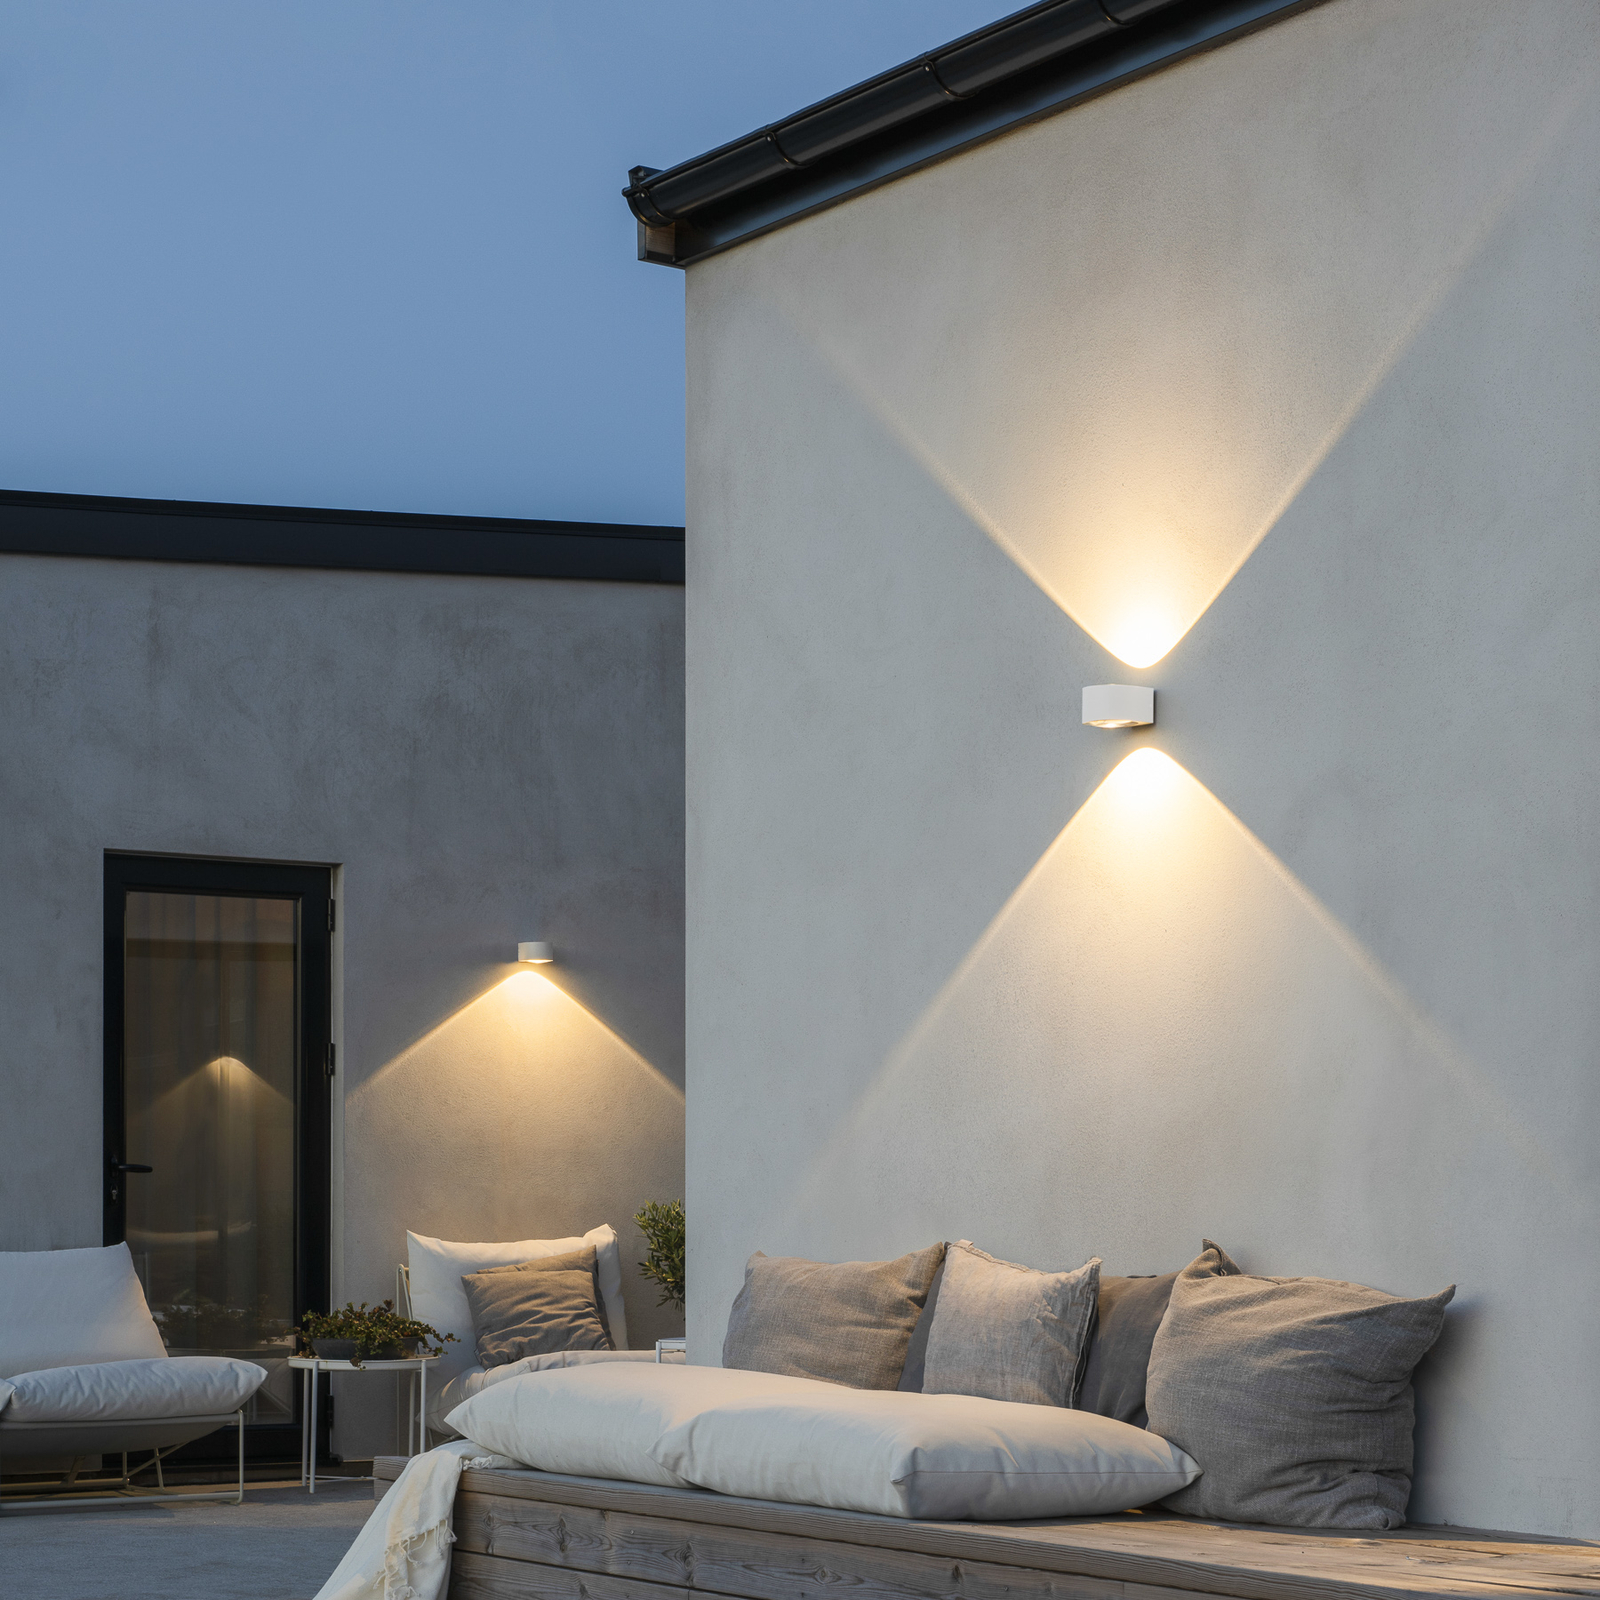 Gela LED outdoor wall light downward shining white